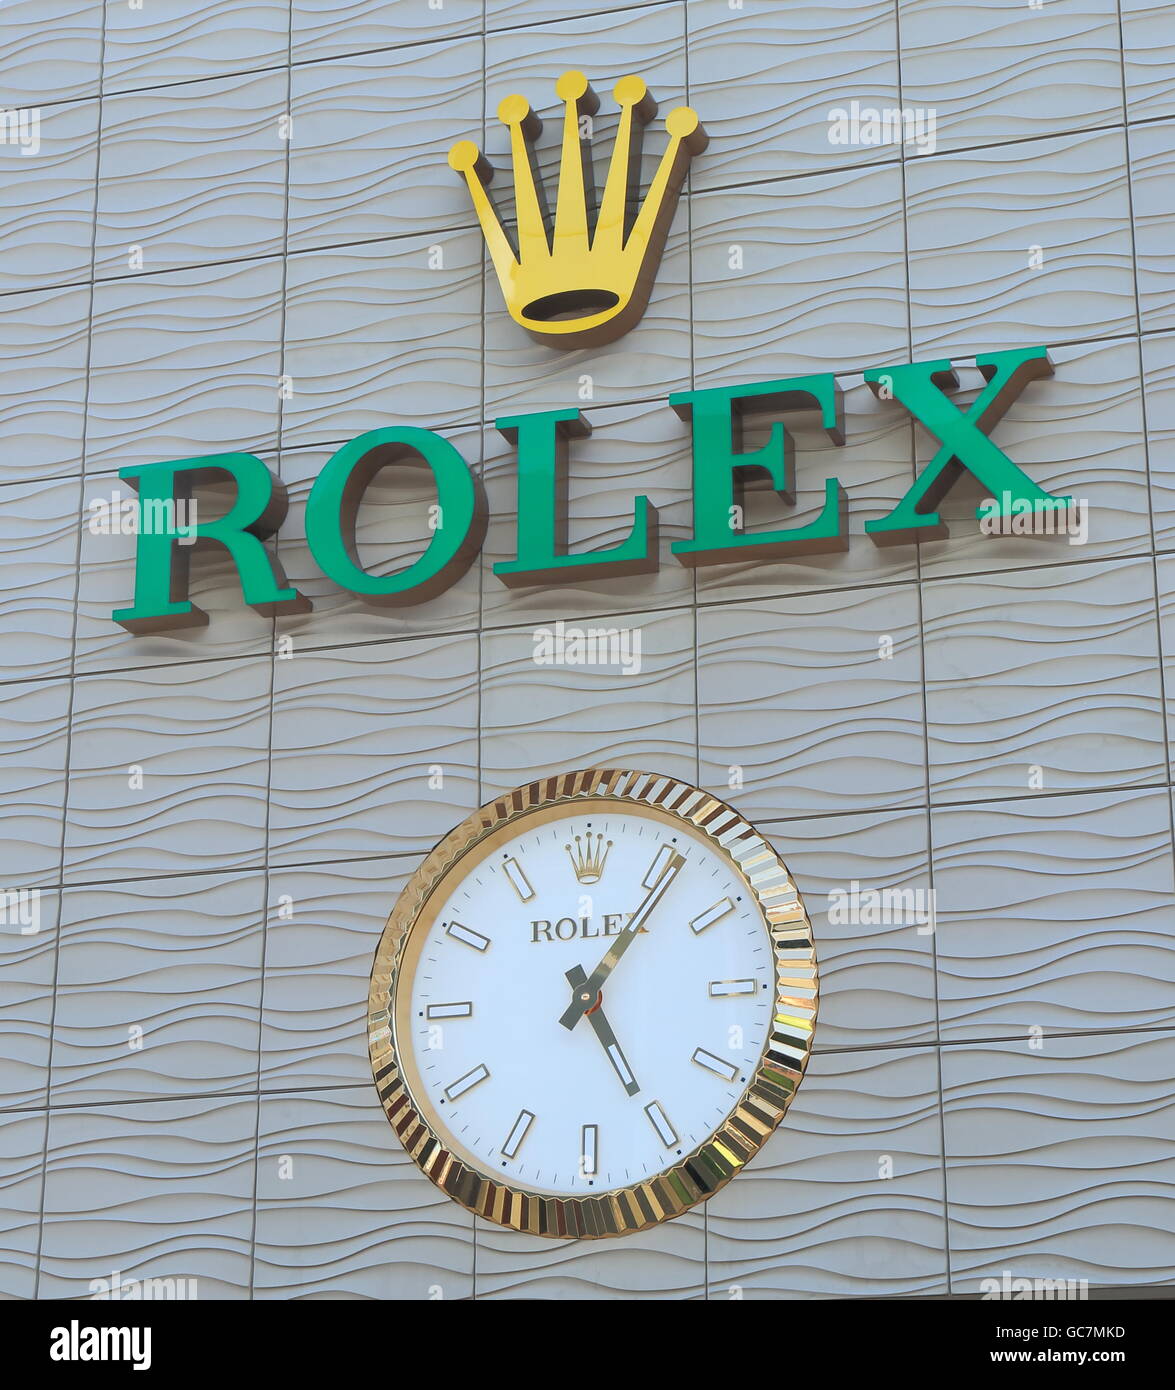 Rolex watch manufacturer company logo Stock Photo